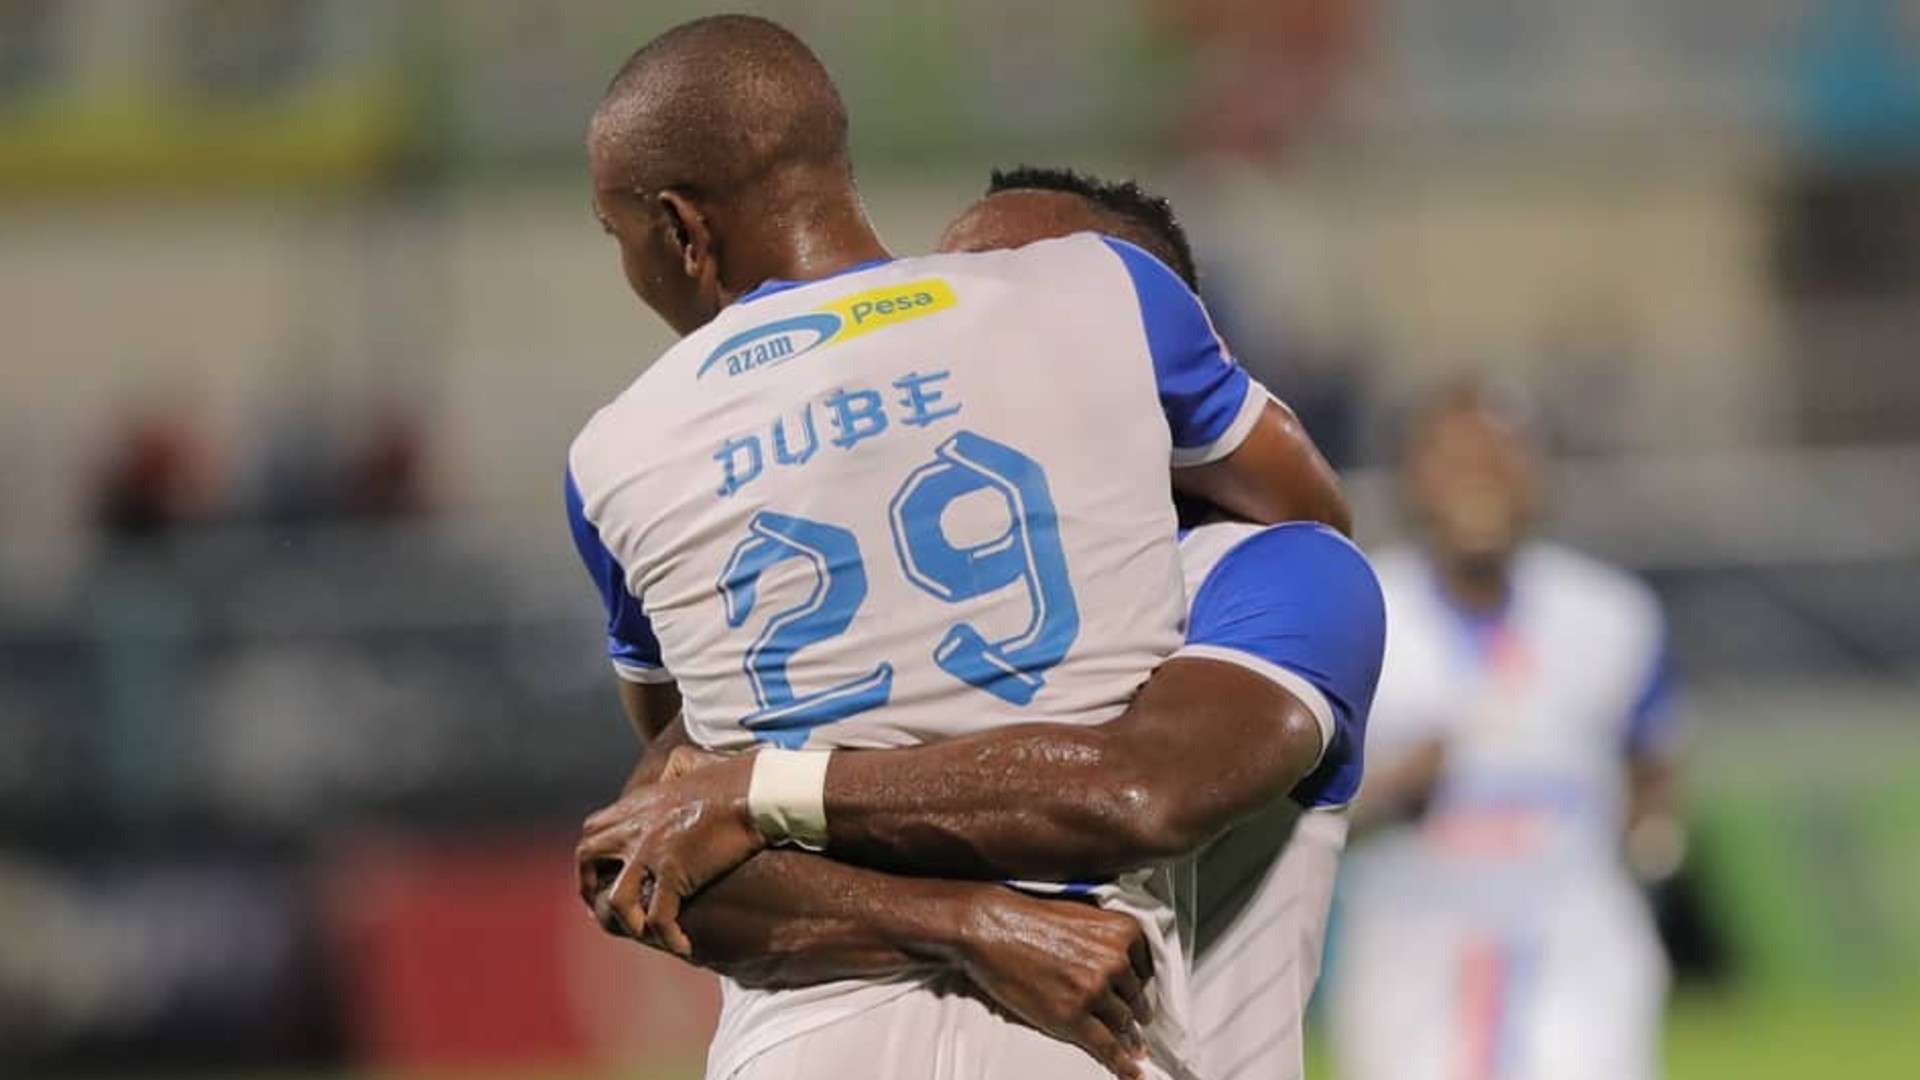 Azam FC striker Prince Dube scores.